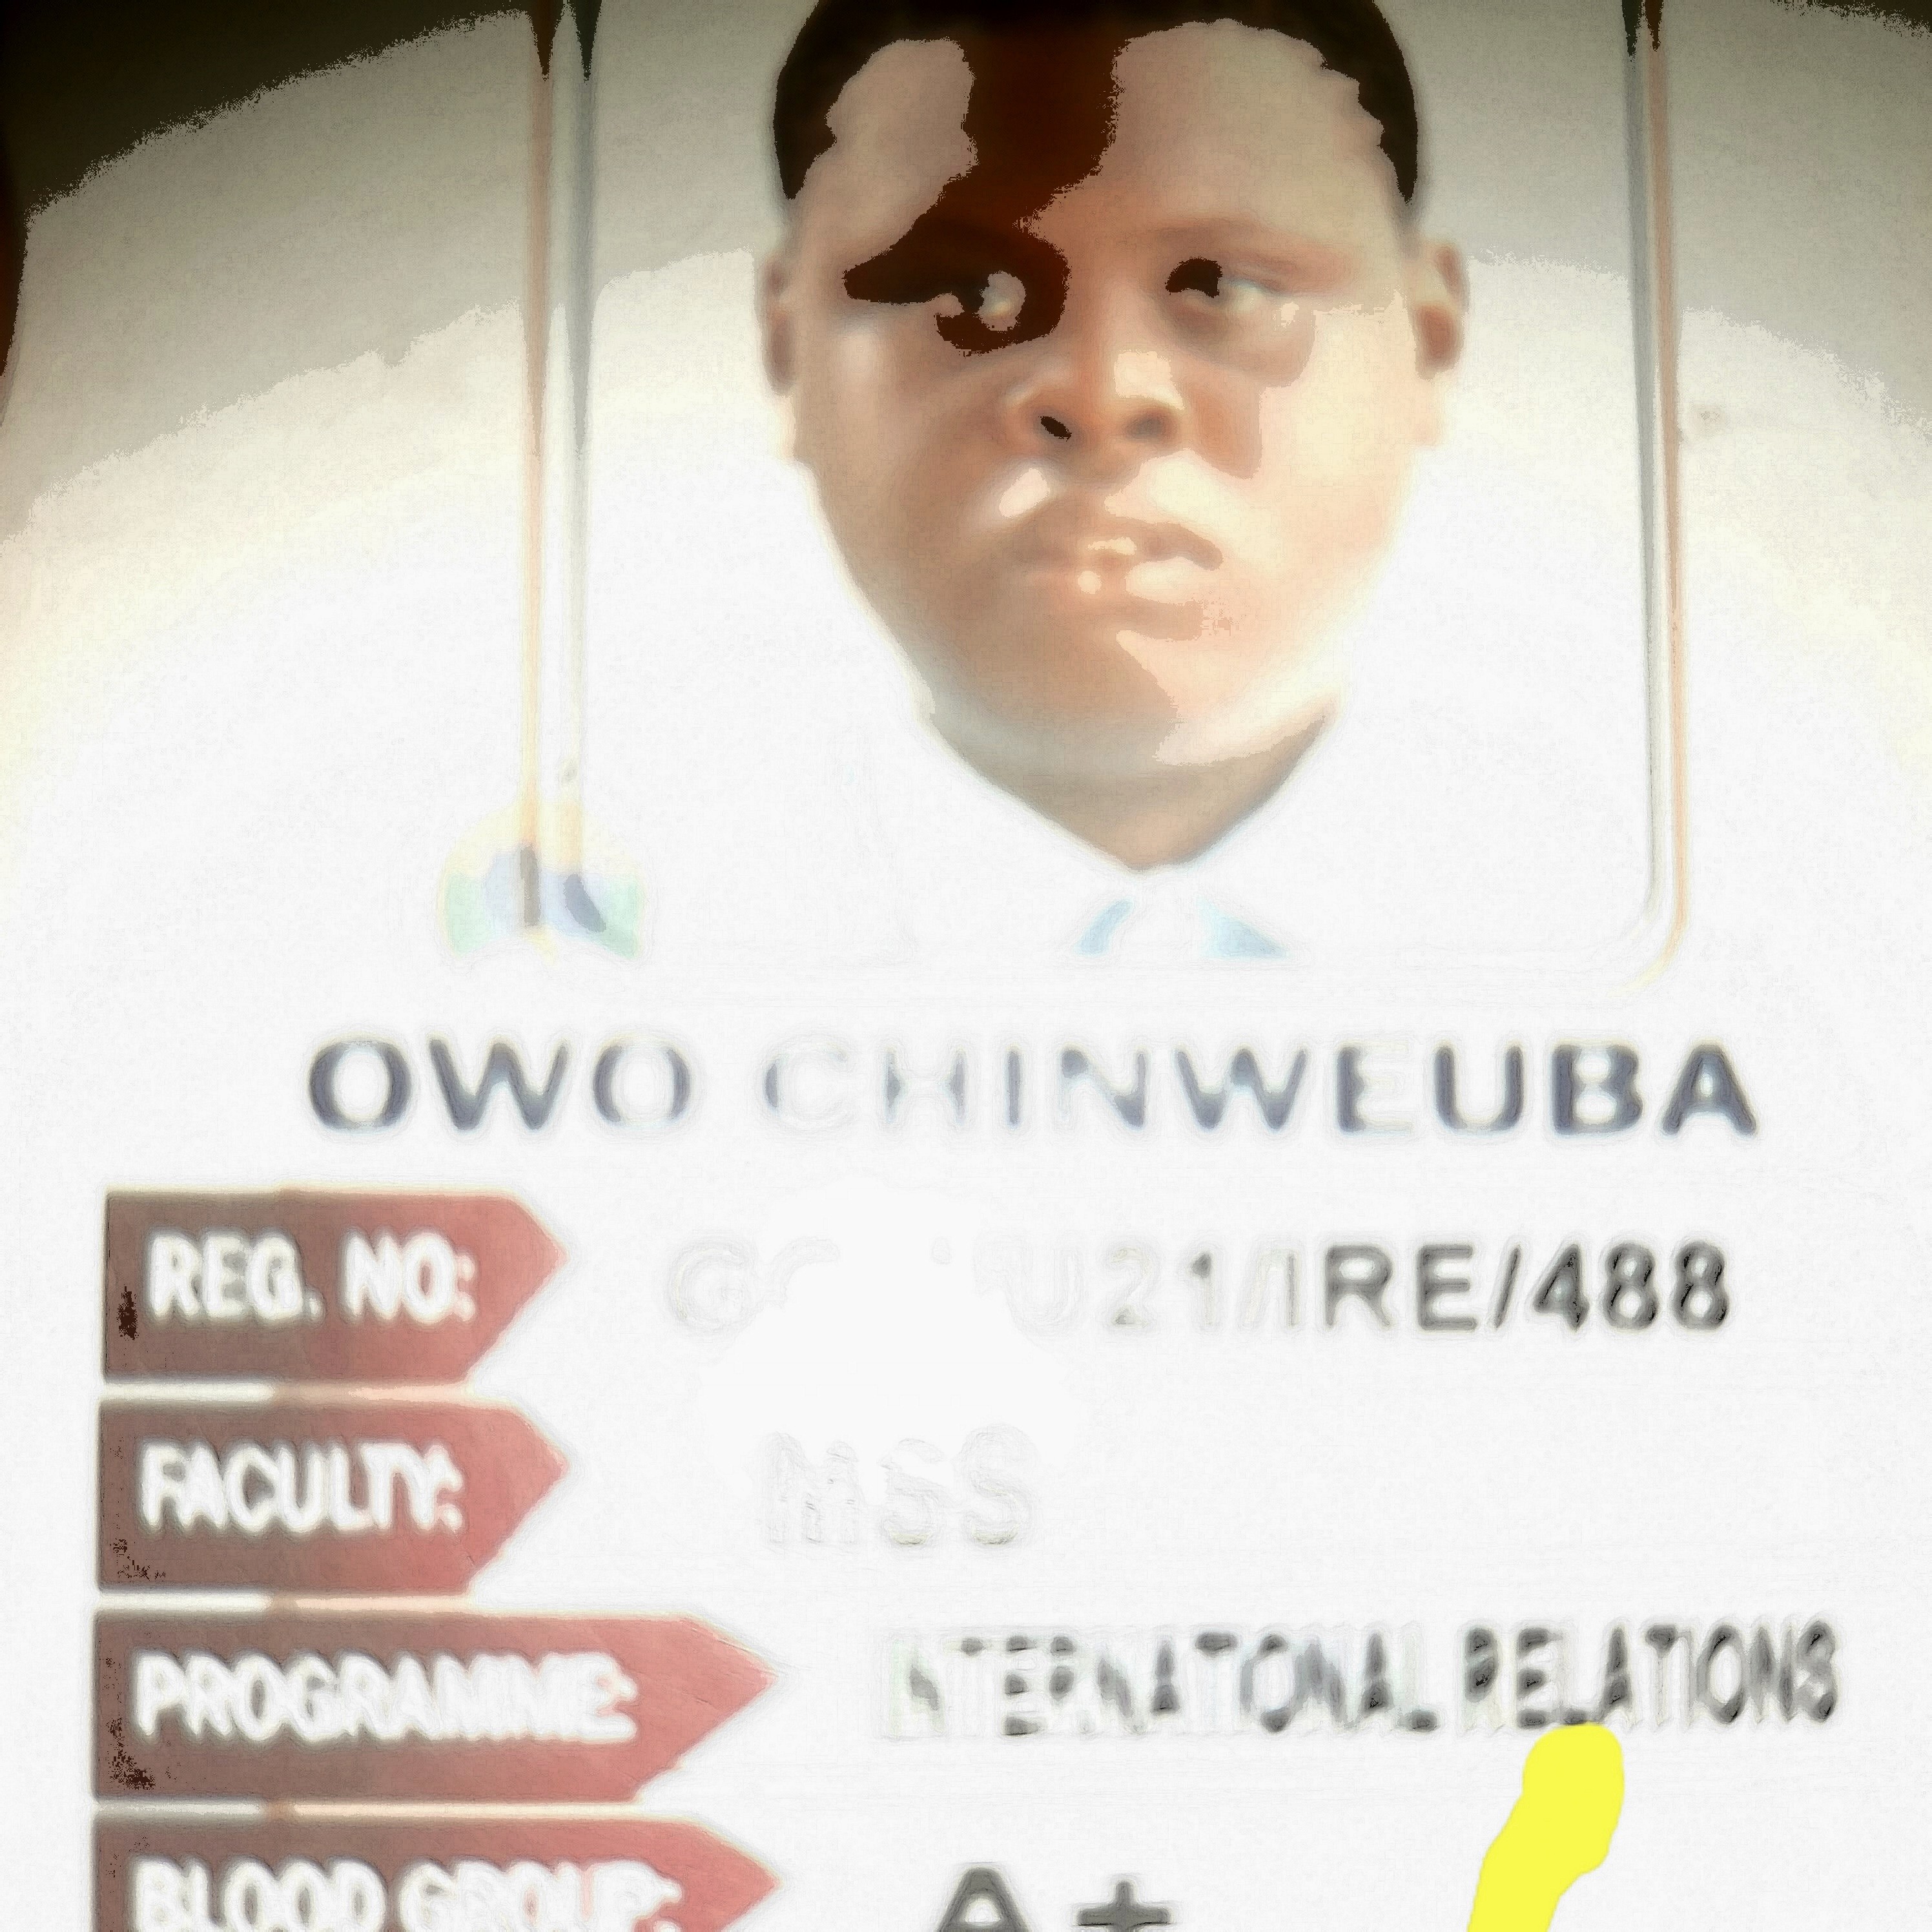 Owo Chinweuba